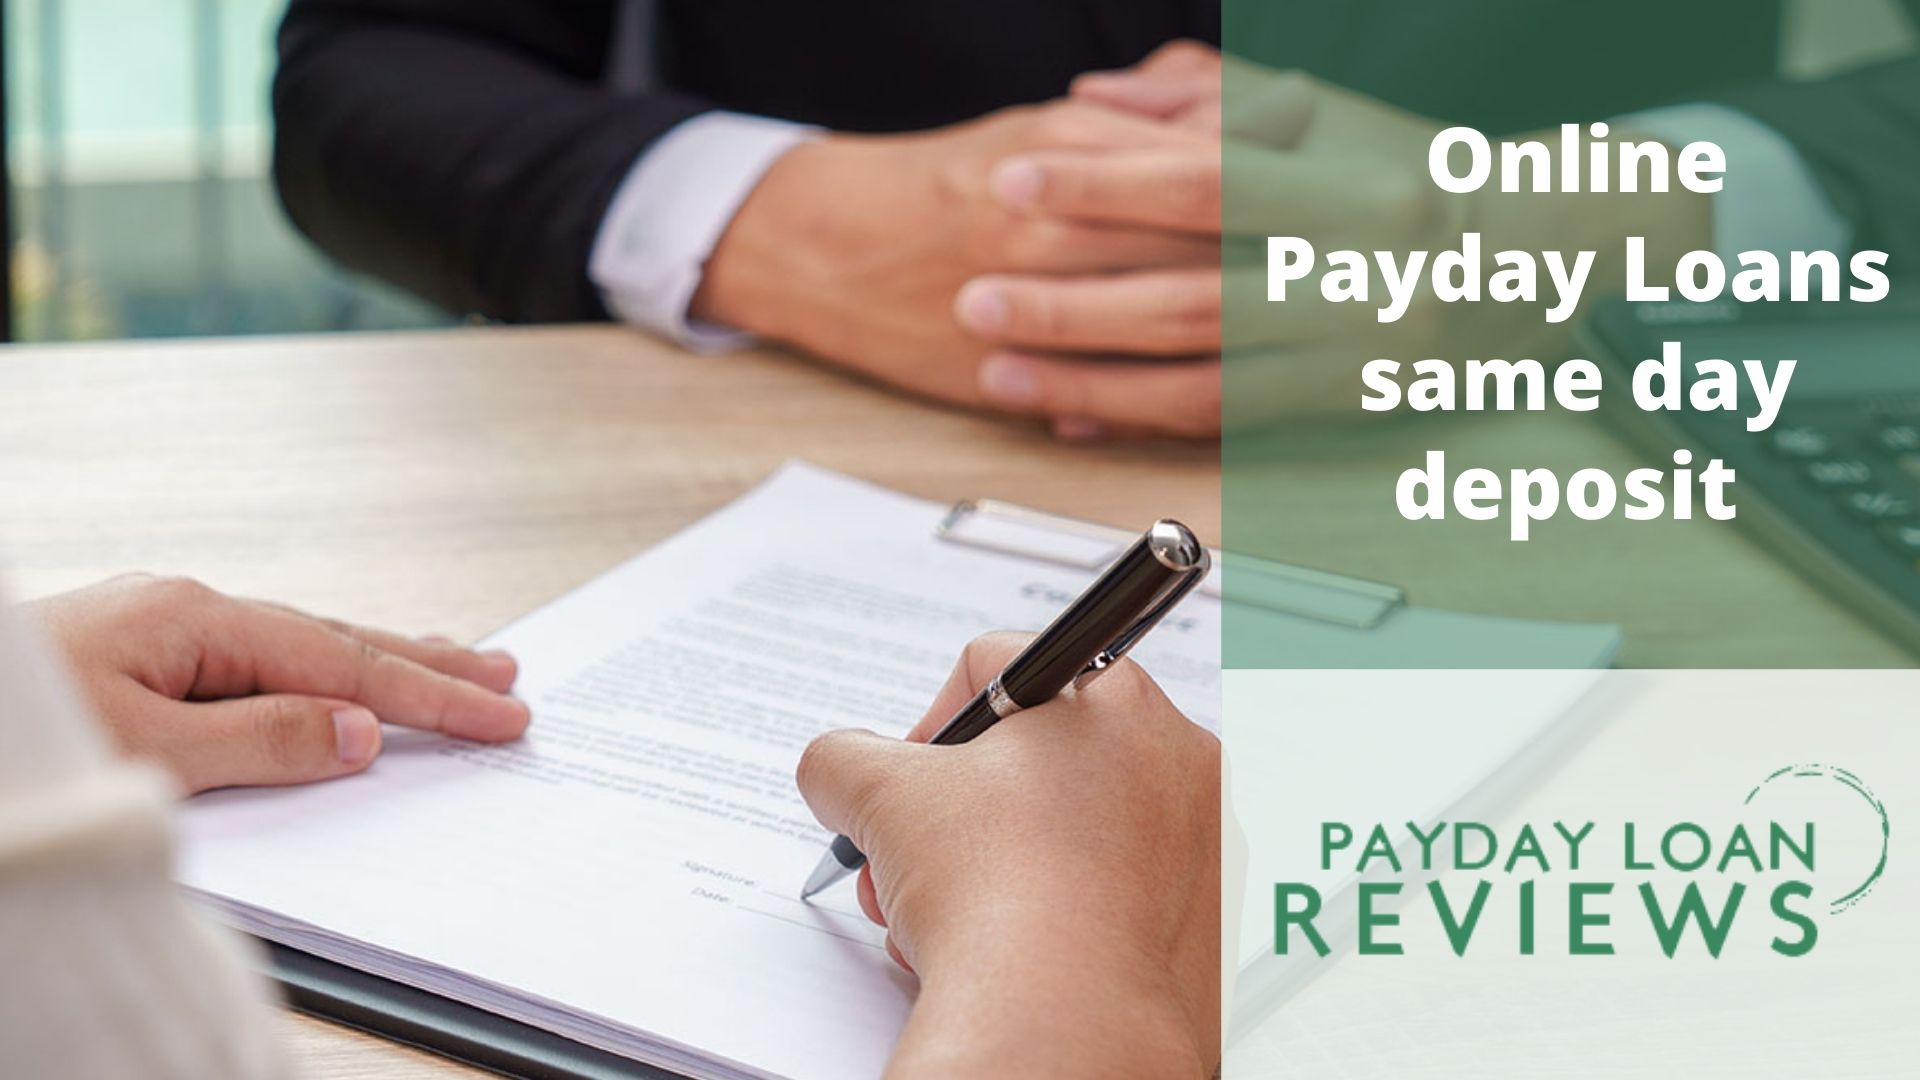 Online Payday Loans same day deposit 